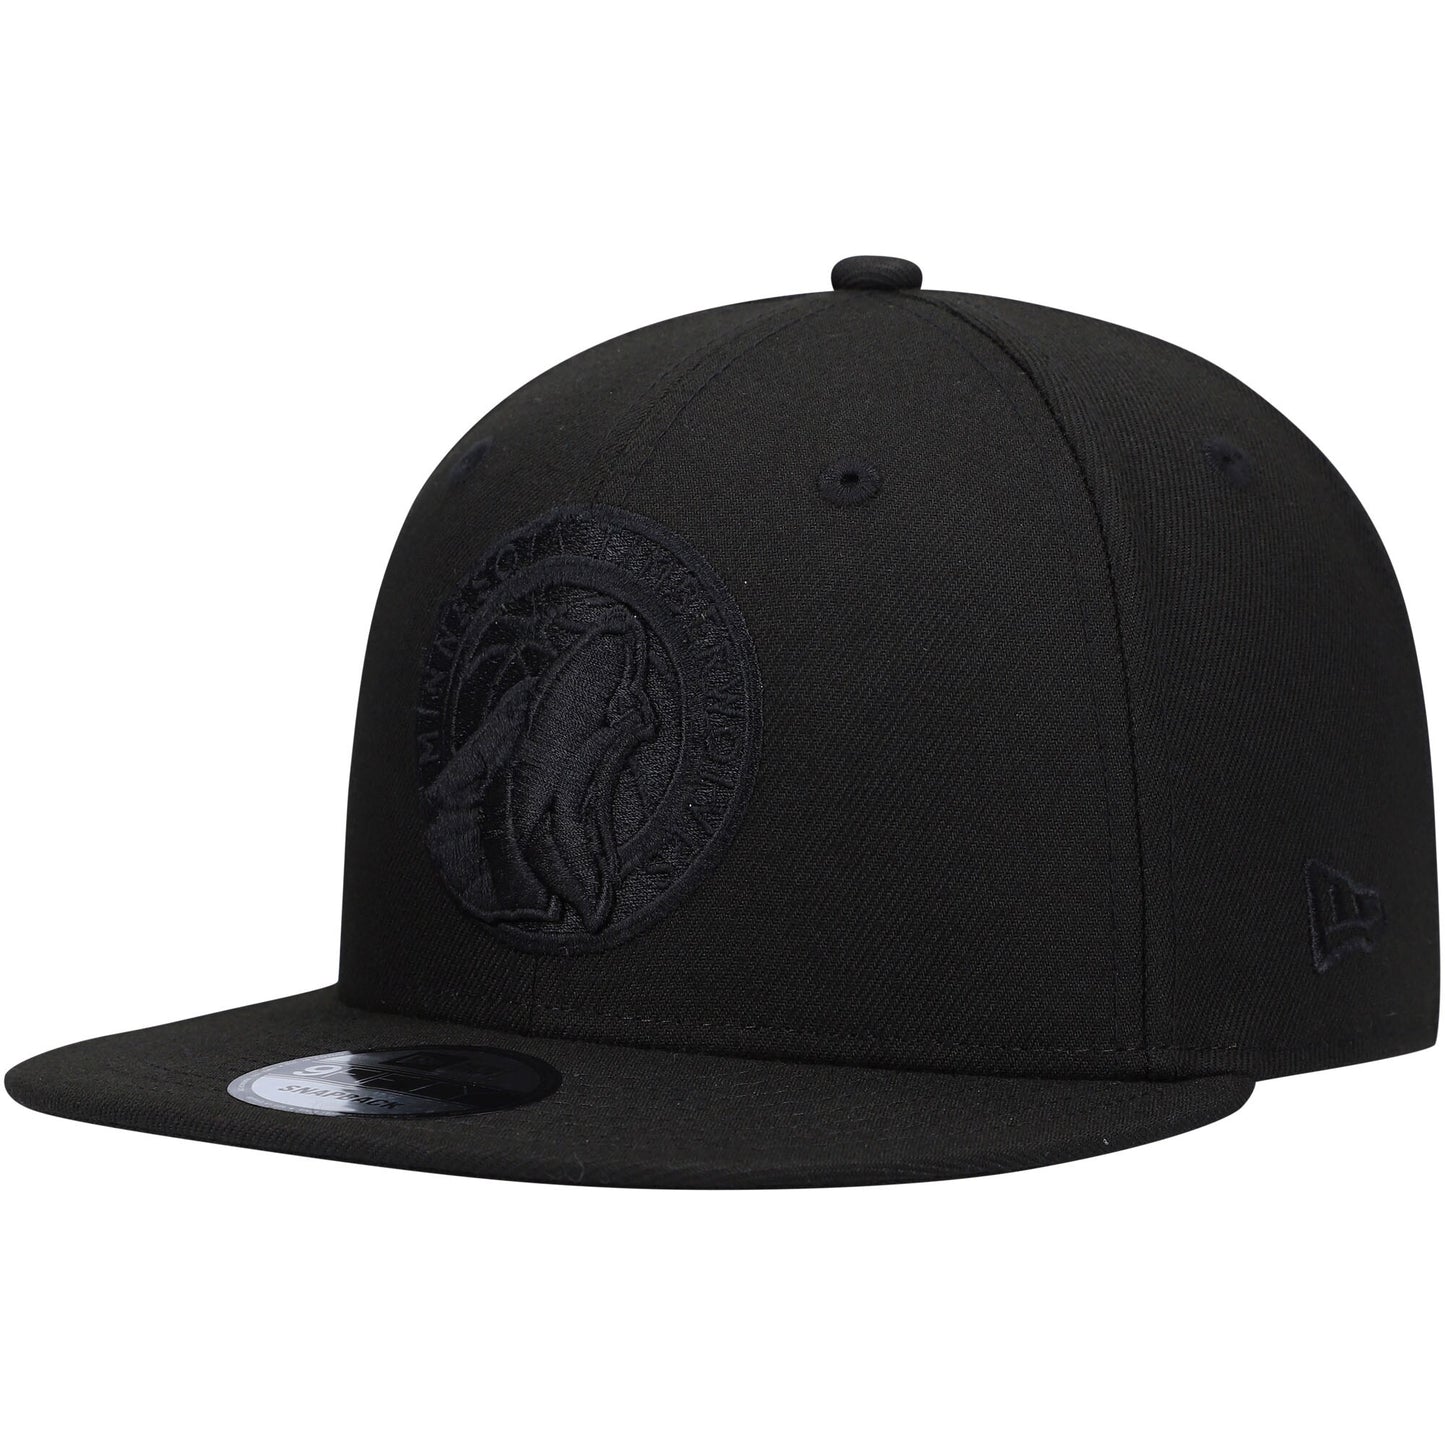 Minnesota Timberwolves New Era Black On Black 9FIFTY Snapback Hat